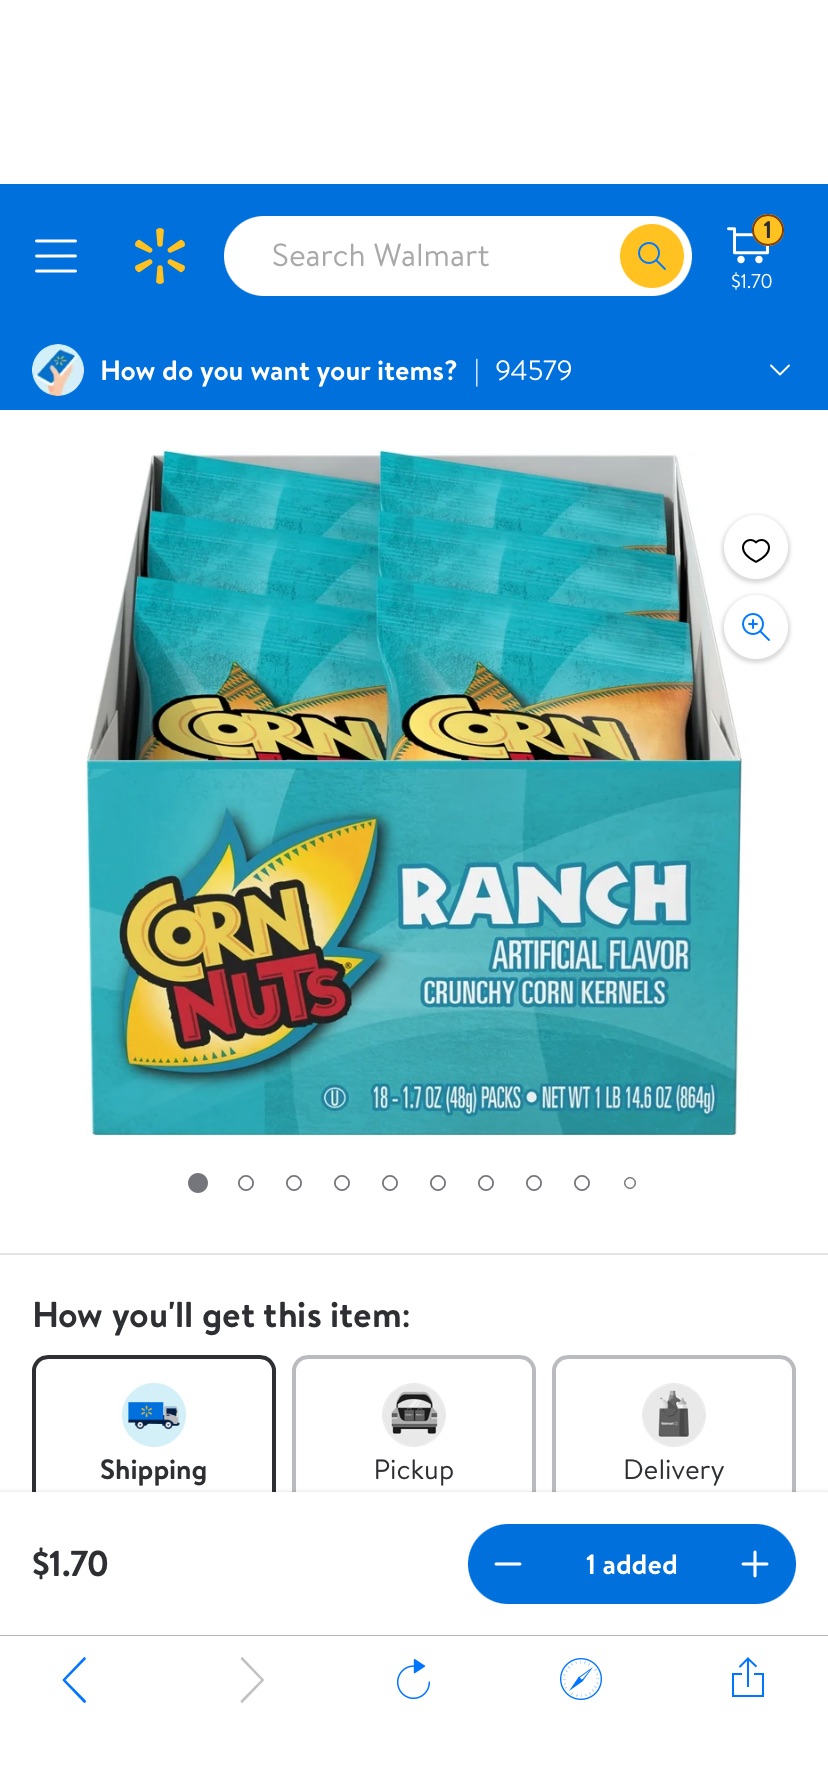 又降价了CORN NUTS Ranch Crunchy Corn Kernels Snack, 1.7 oz Plastic Pouch (Pack of 18) - Walmart.com只能邮寄